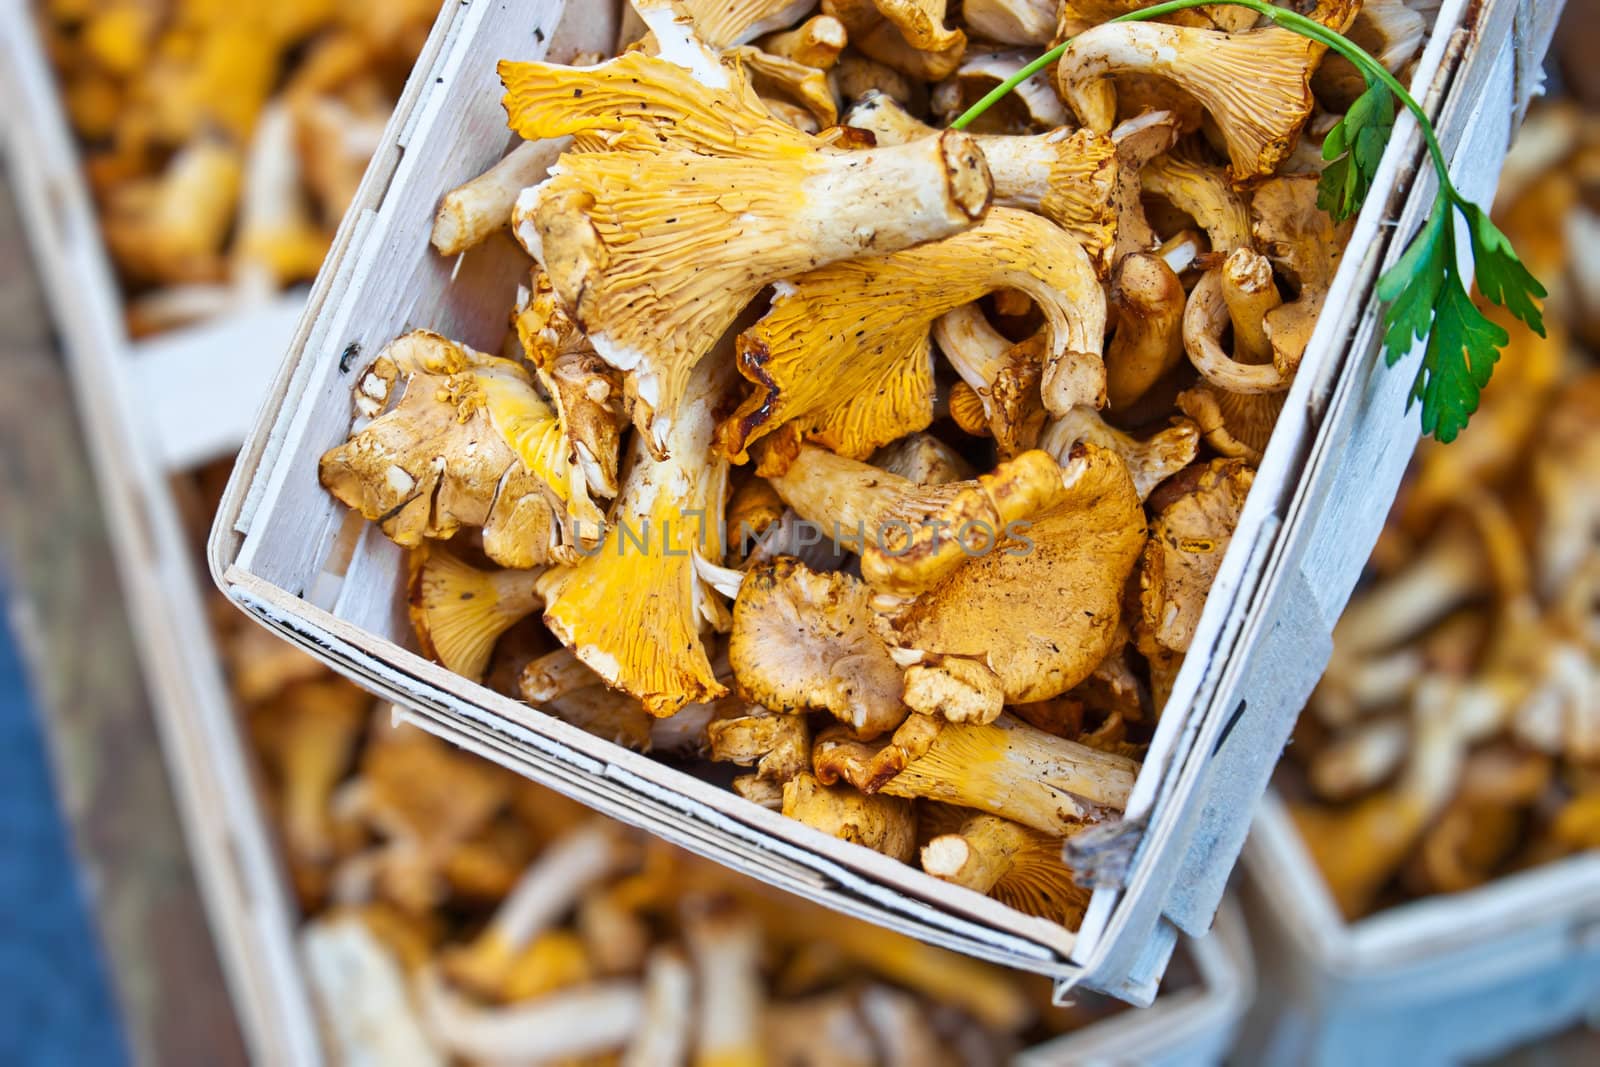 Photograph taken of fresh mushrooms, from a market in Berlin.